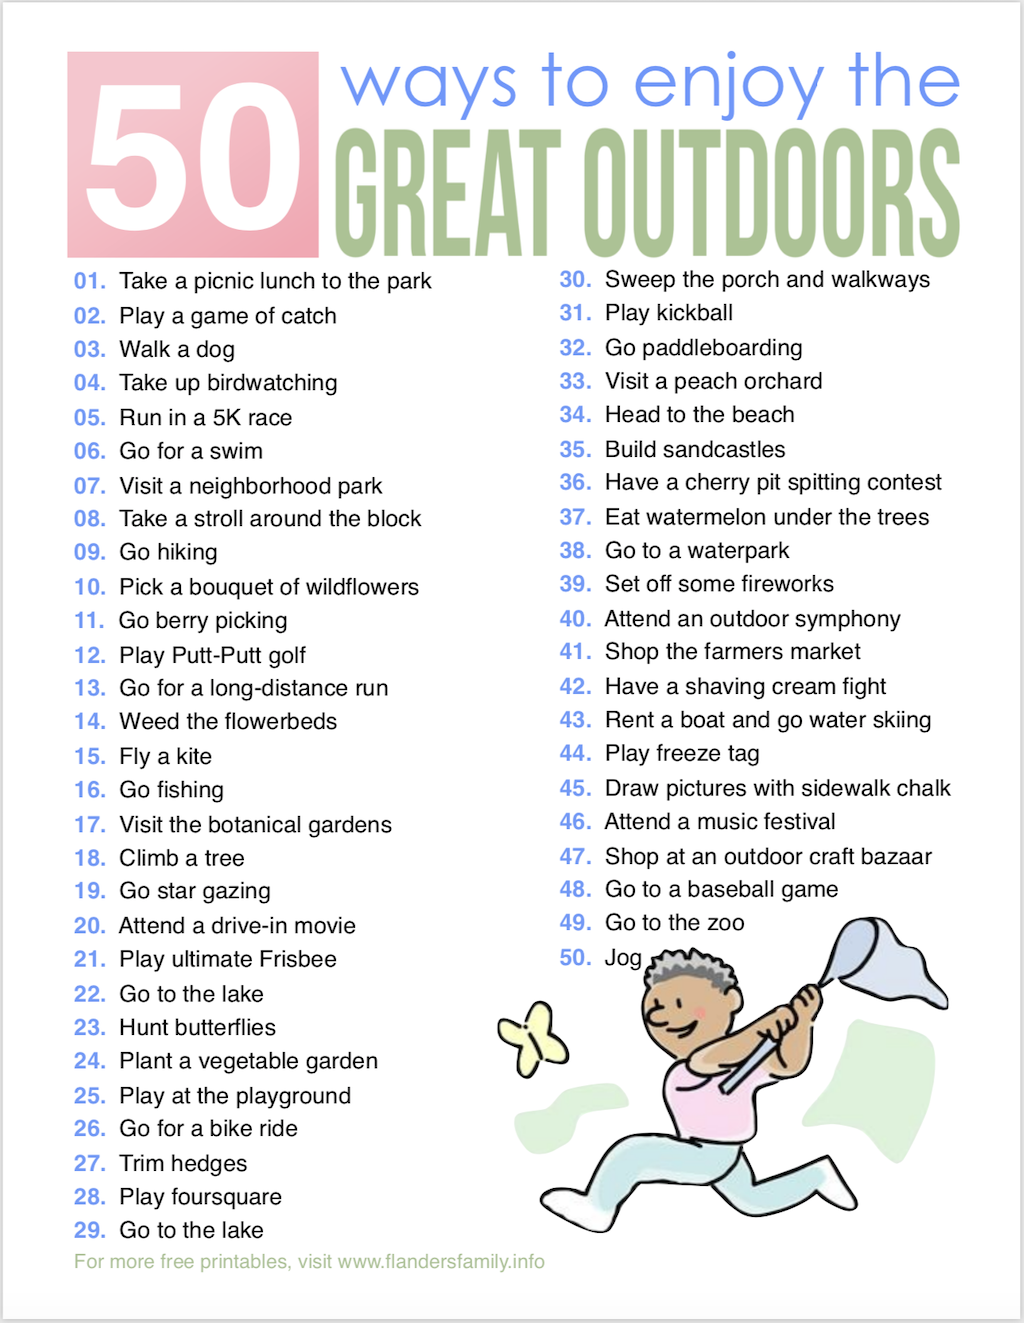 50 Ways to Enjoy Great Outdoors